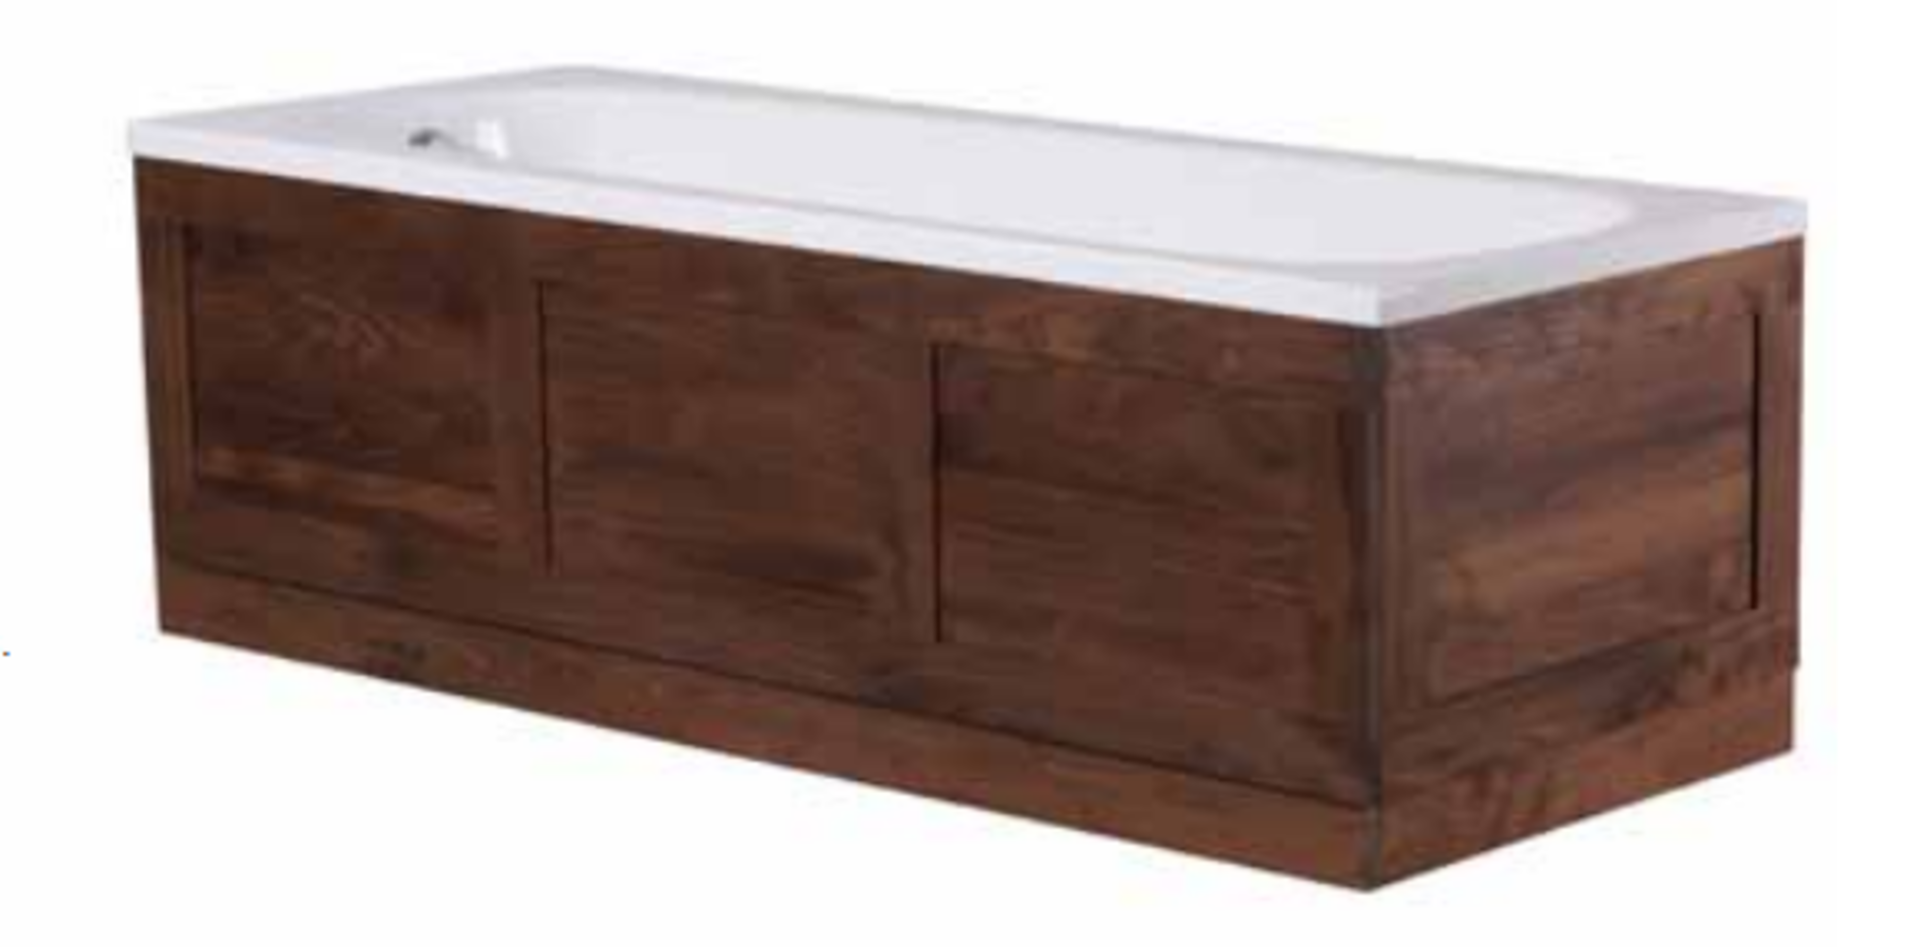 1 x Stonearth 1700mm Bath Front Panel Set - American Solid Walnut - Unused Stock - Original RRP £798 - Image 8 of 11